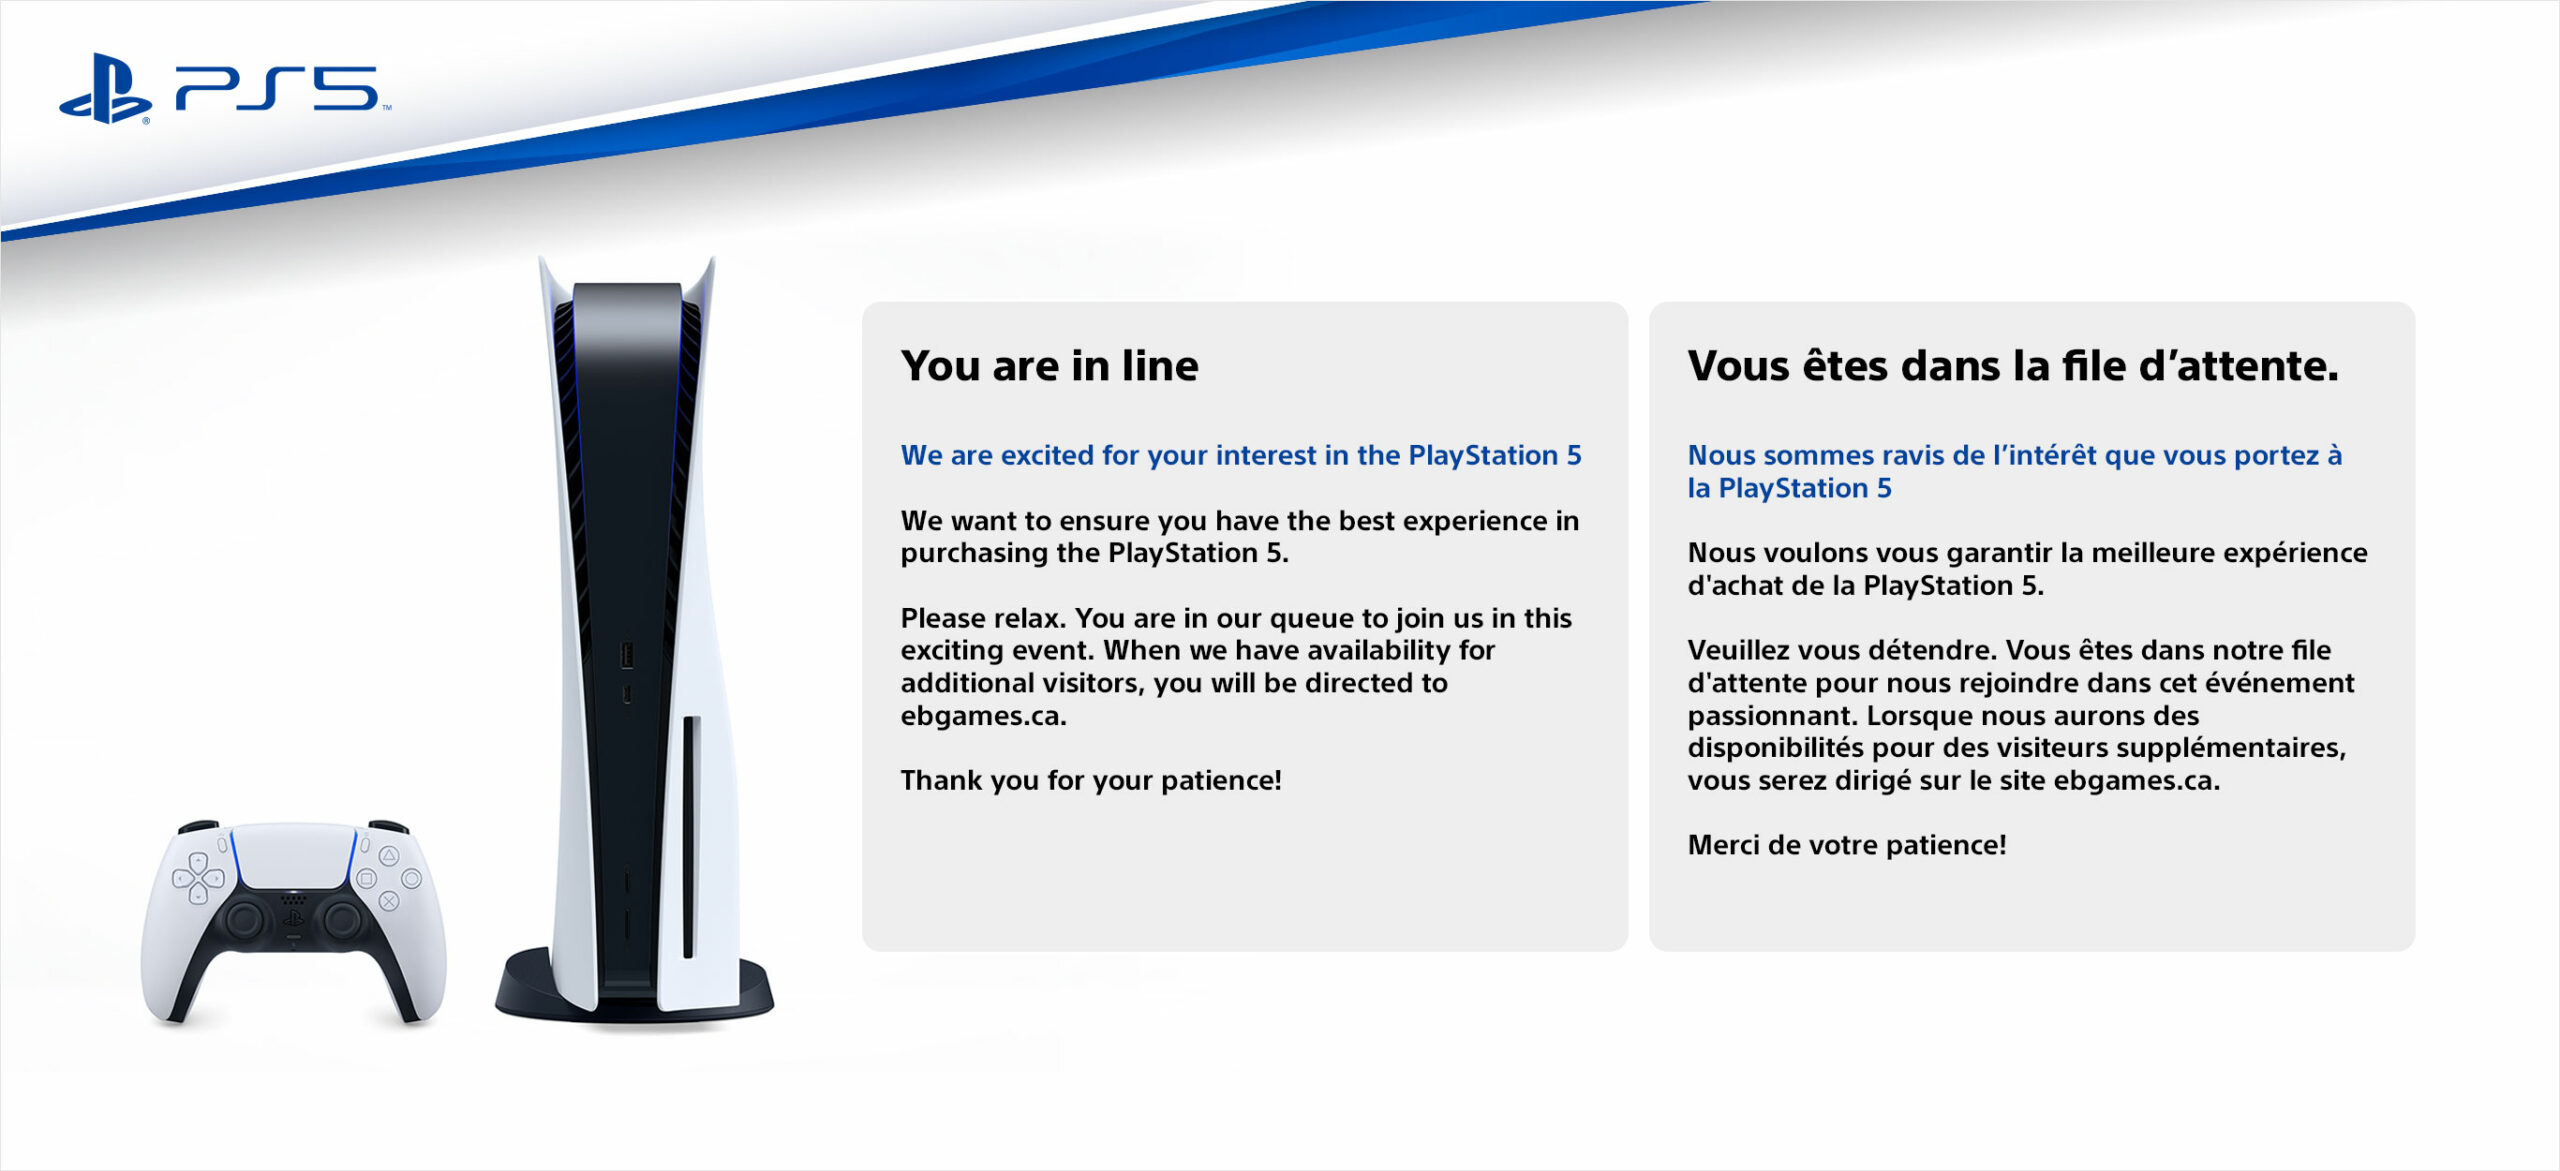 PlayStation 5 EB games waiting room 